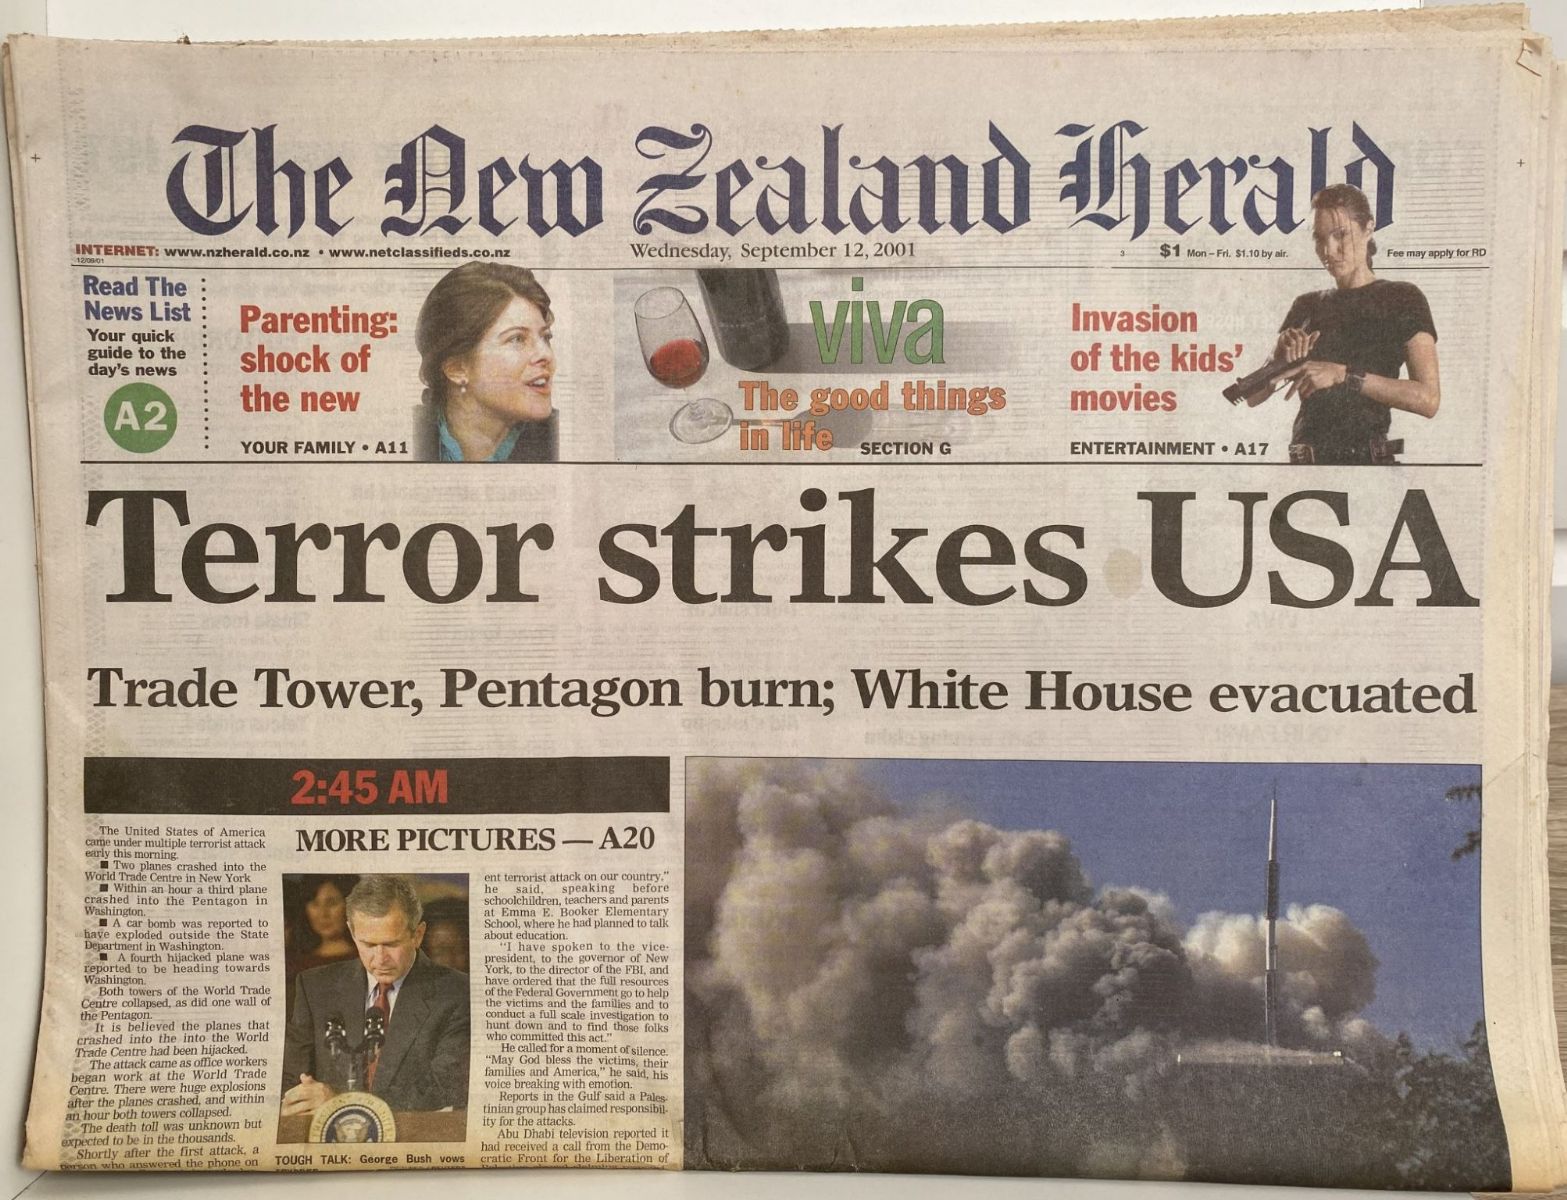 OLD NEWSPAPER: The New Zealand Herald, 12 September 2001 - 9/11 Terror Attacks